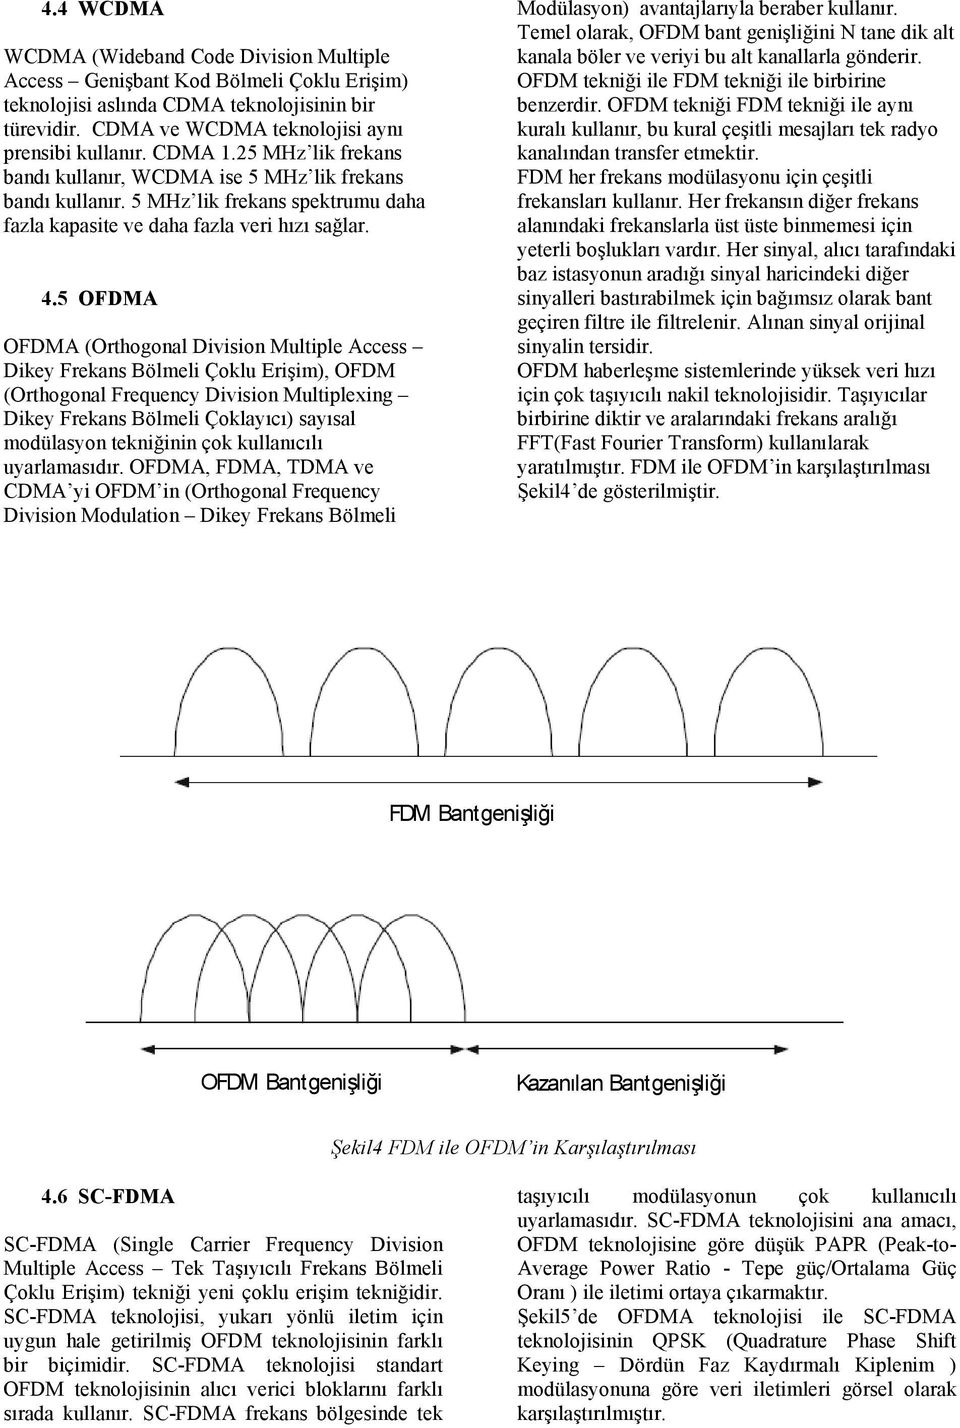 5 OFDMA OFDMA (Orthogonal Division Multiple Access Dikey Frekans Bölmeli Çoklu Erişim), OFDM (Orthogonal Frequency Division Multiplexing Dikey Frekans Bölmeli Çoklayıcı) sayısal modülasyon tekniğinin